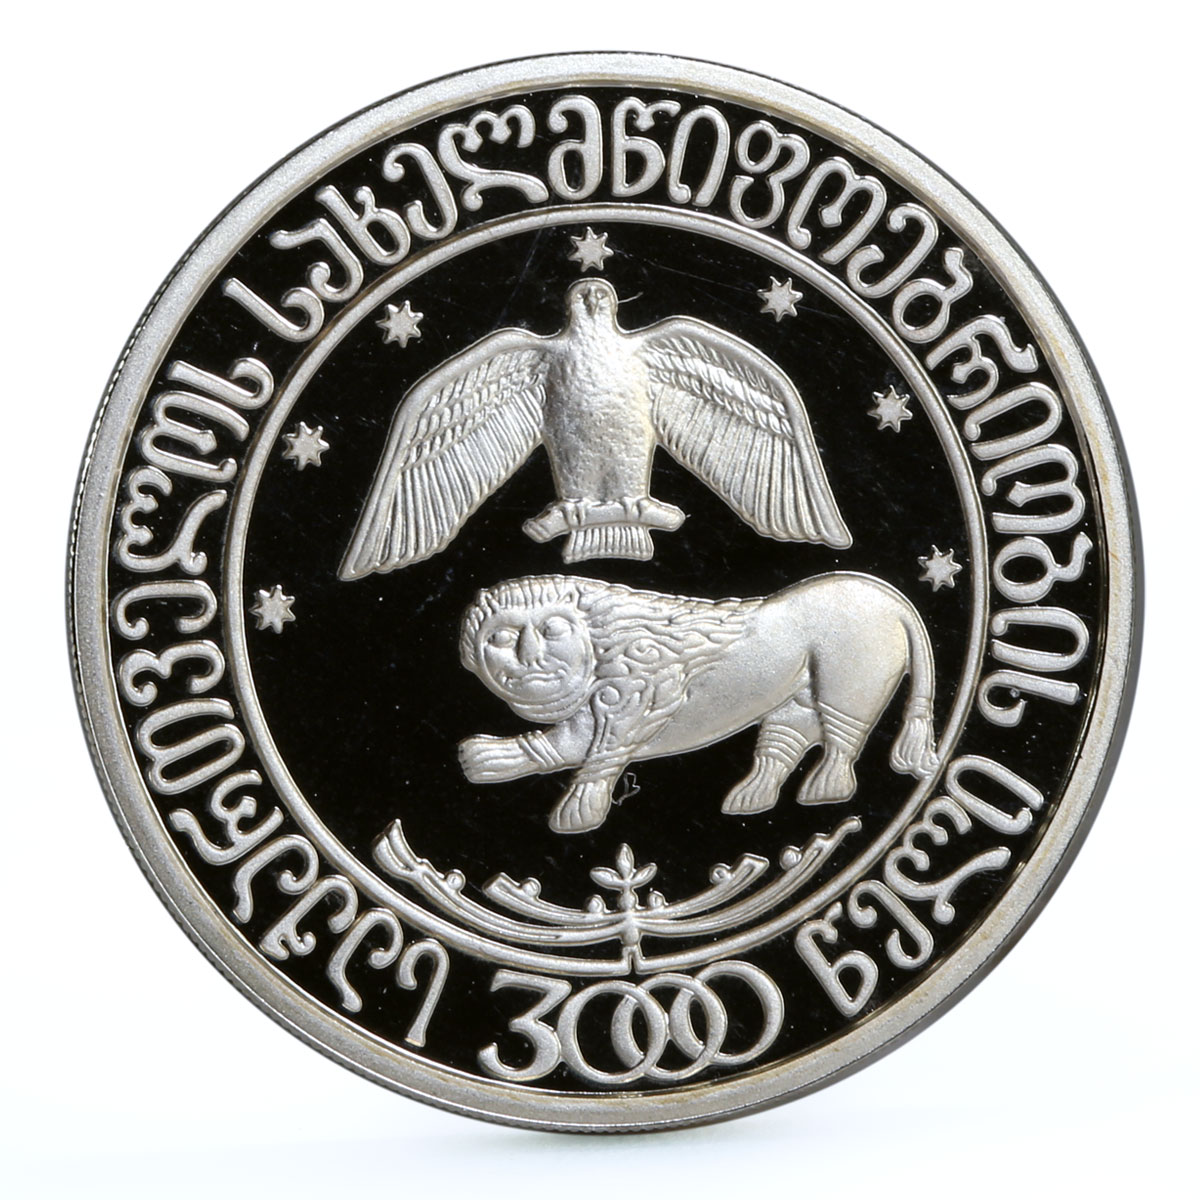 Georgia 10 lari 3000th Anniversary of Georgian Statehood proof silver coin 2000